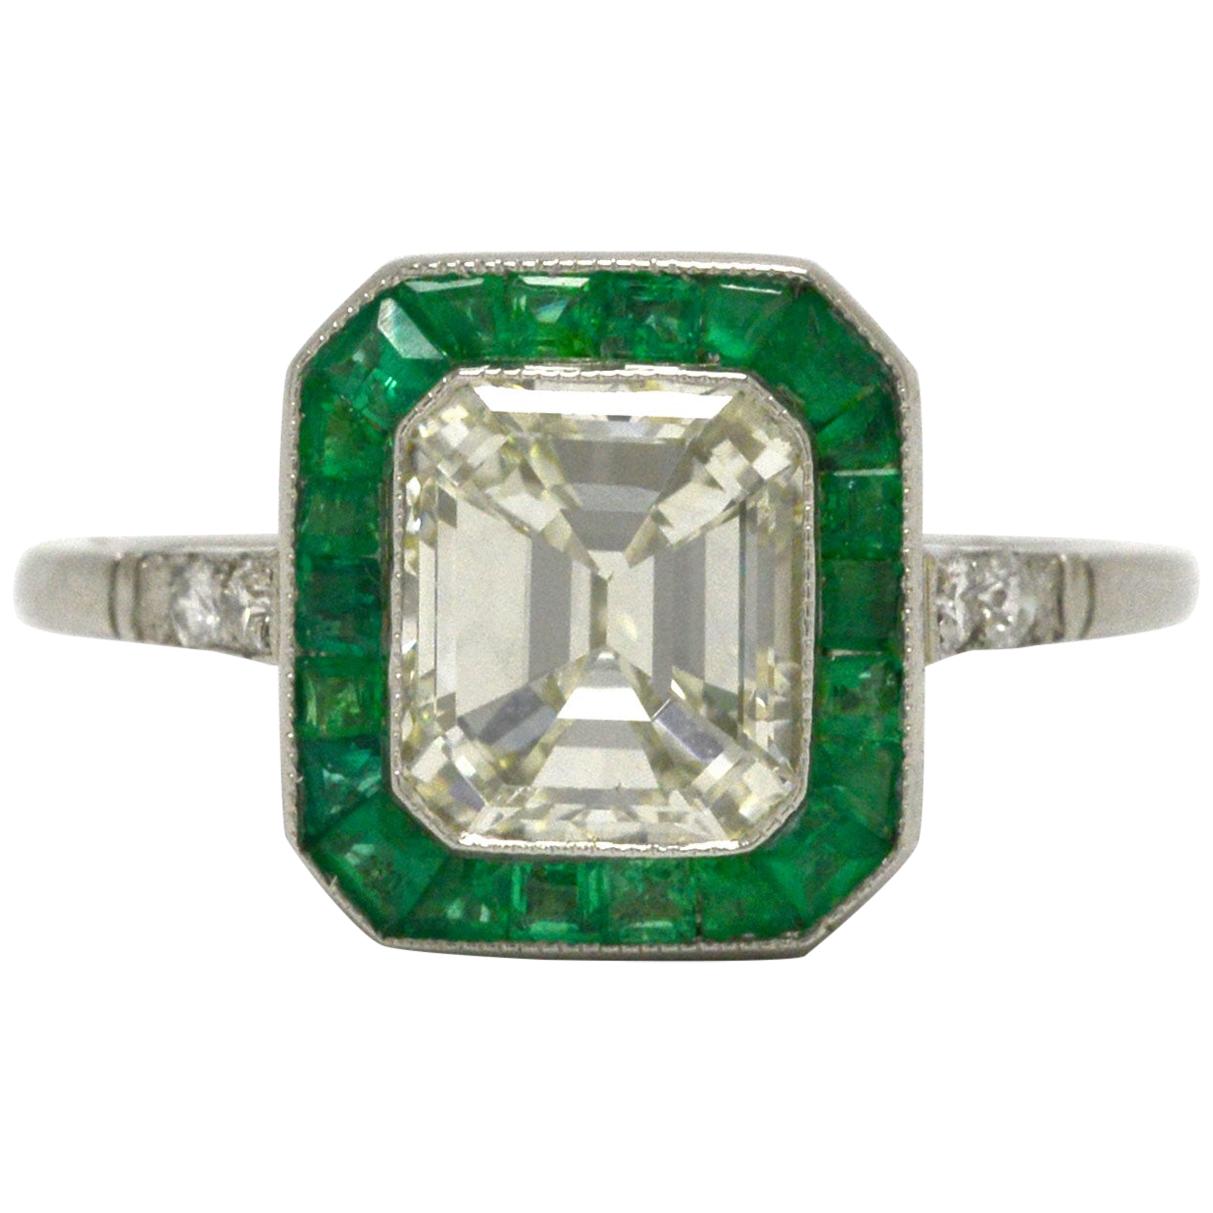 Art Deco Revival Emerald Cut Diamond Engagement Ring Platinum Halo 2 Carat